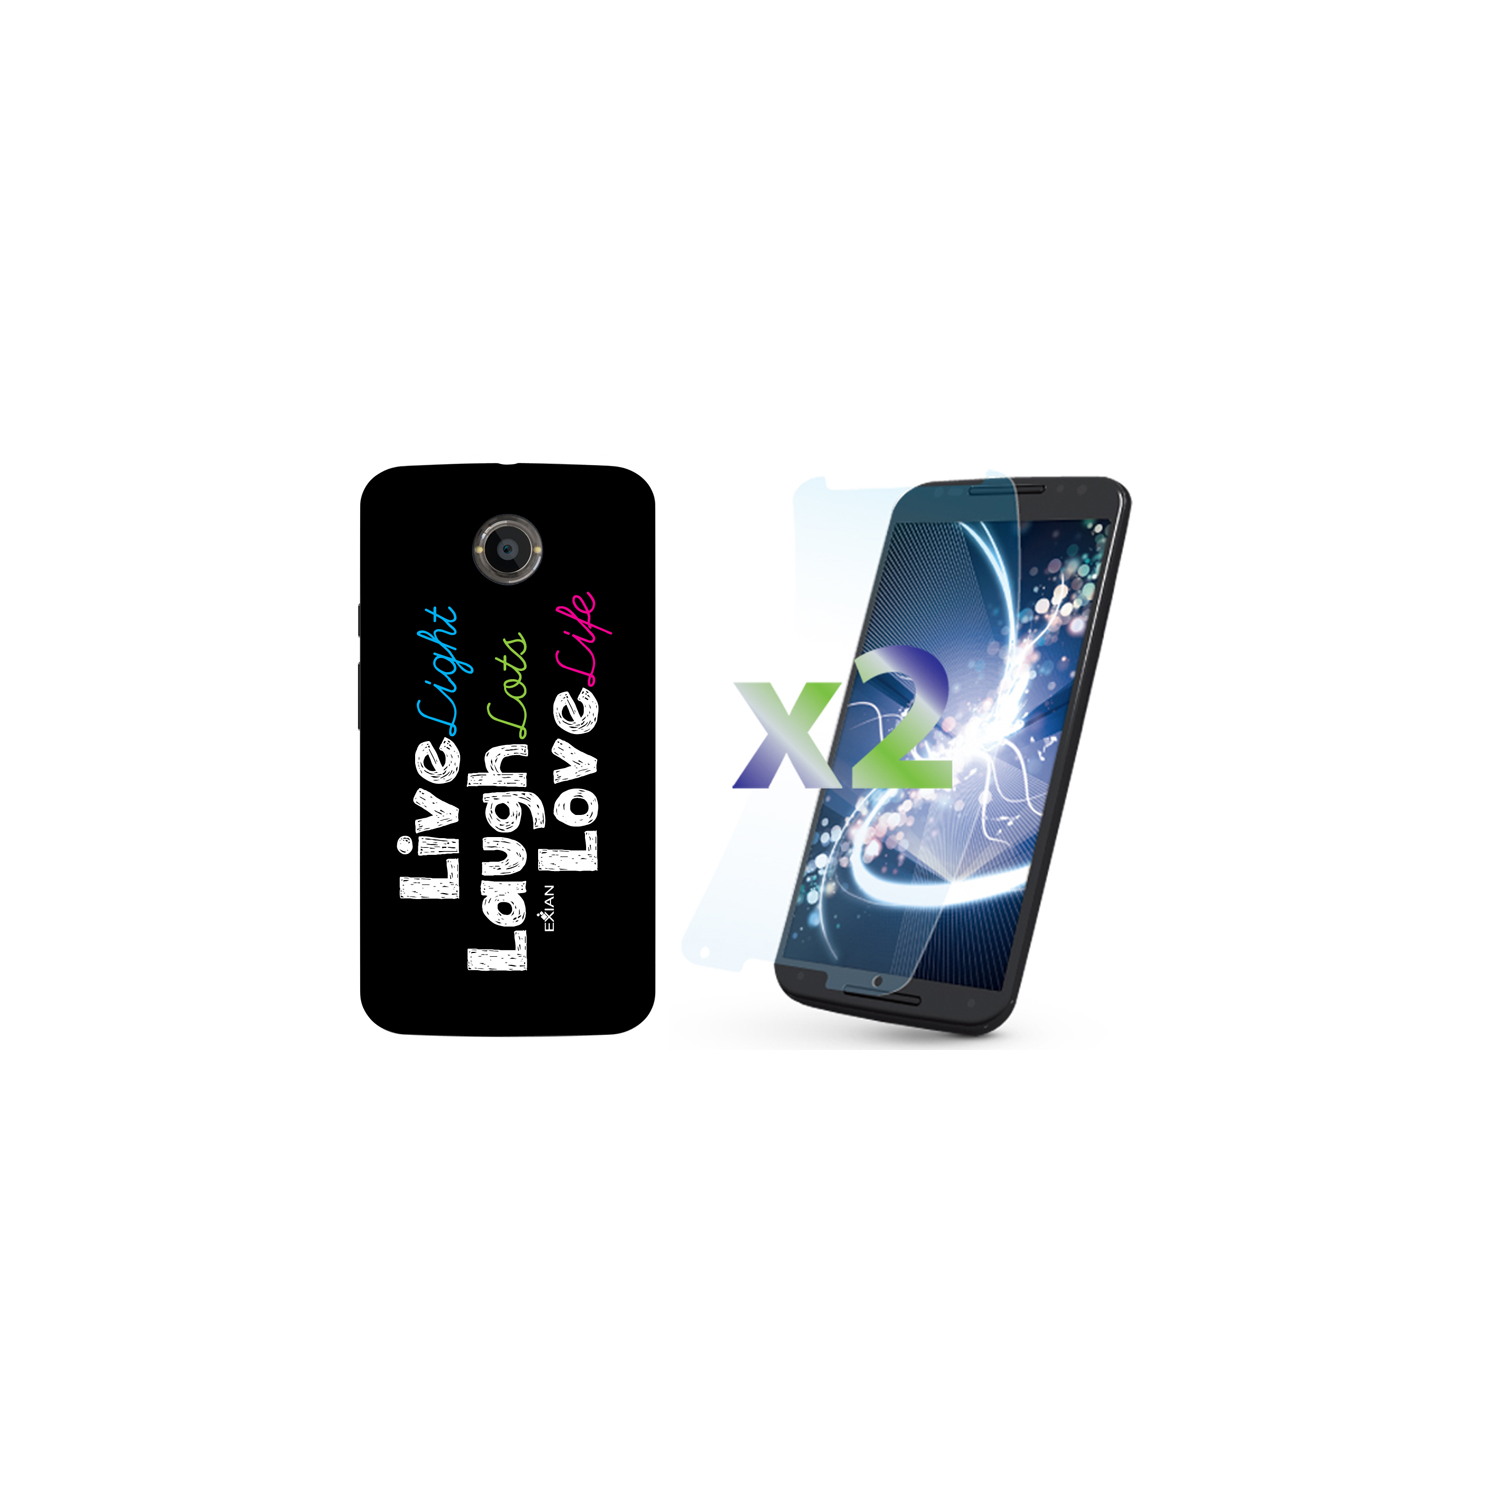 Exian Motorola Moto X2(2nd Gen) Screen Protectors X 2 and TPU Case Exian Design Live/Laugh/Love(1) Black